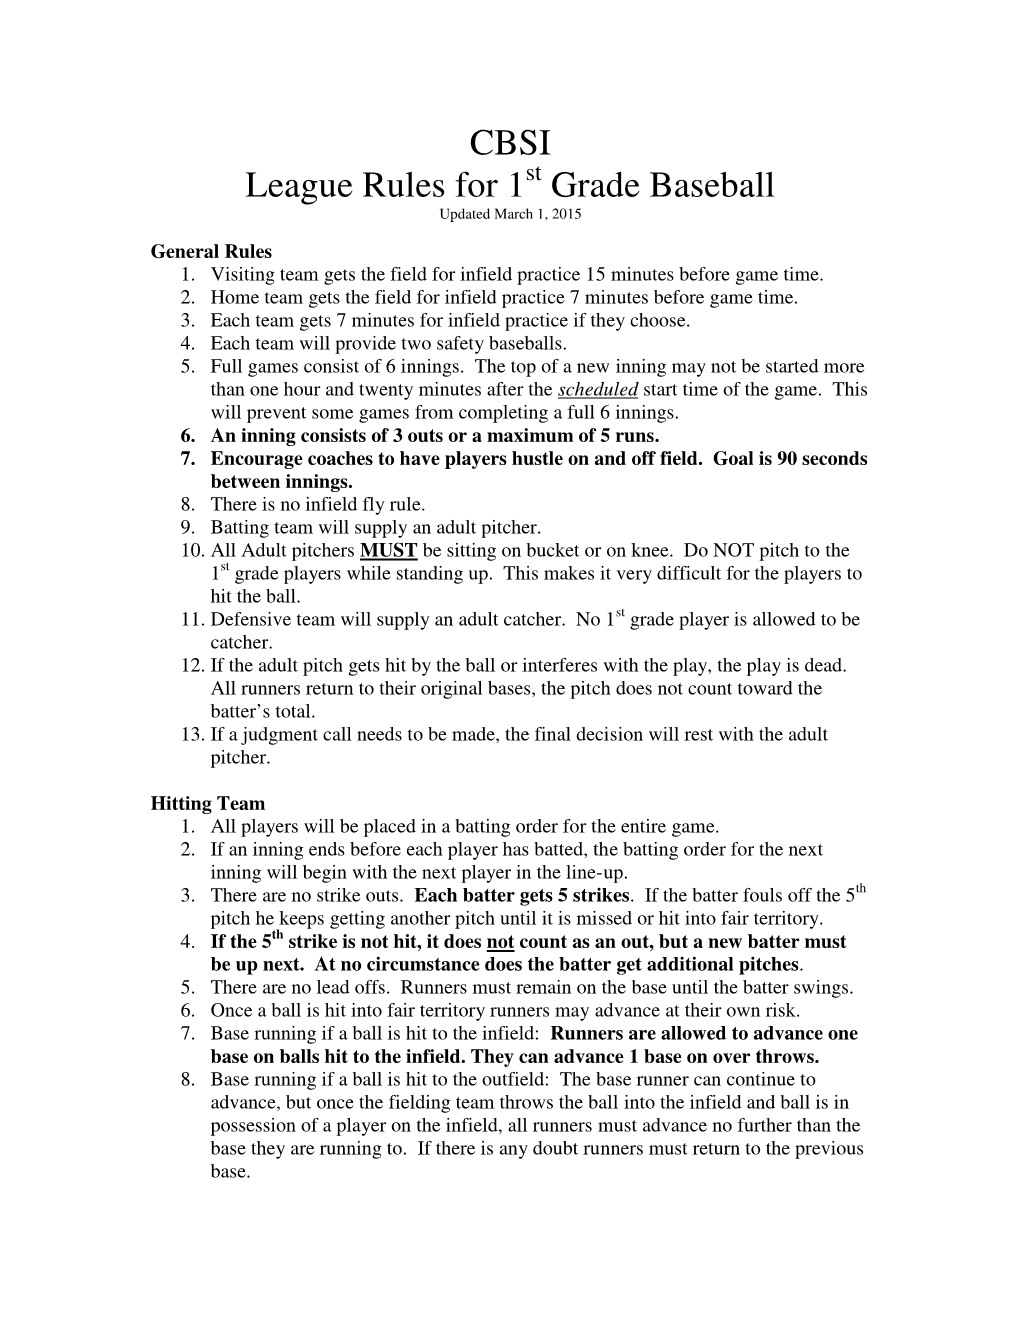 CBSI League Rules for 1 Grade Baseball